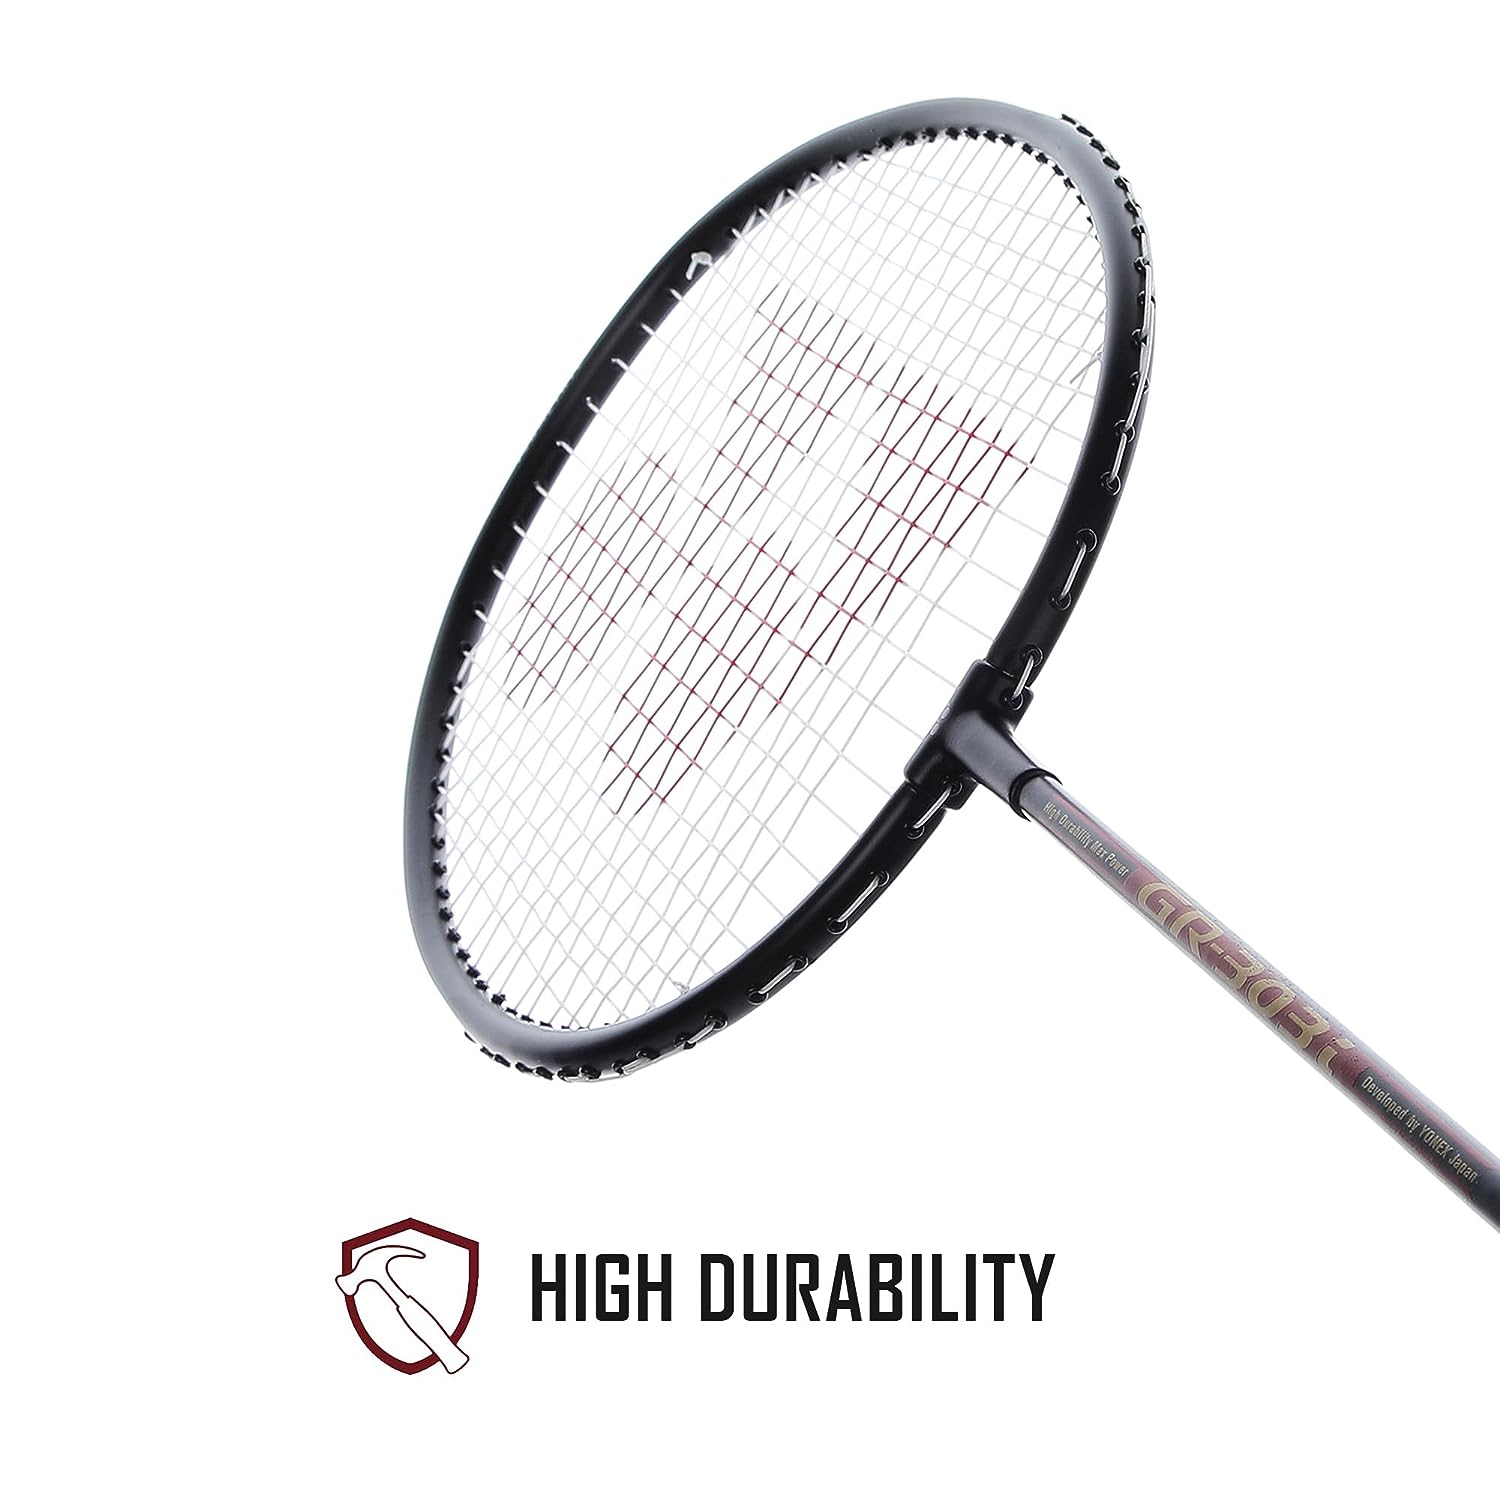 Yonex GR 303 Badminton Racket for Beginner Players